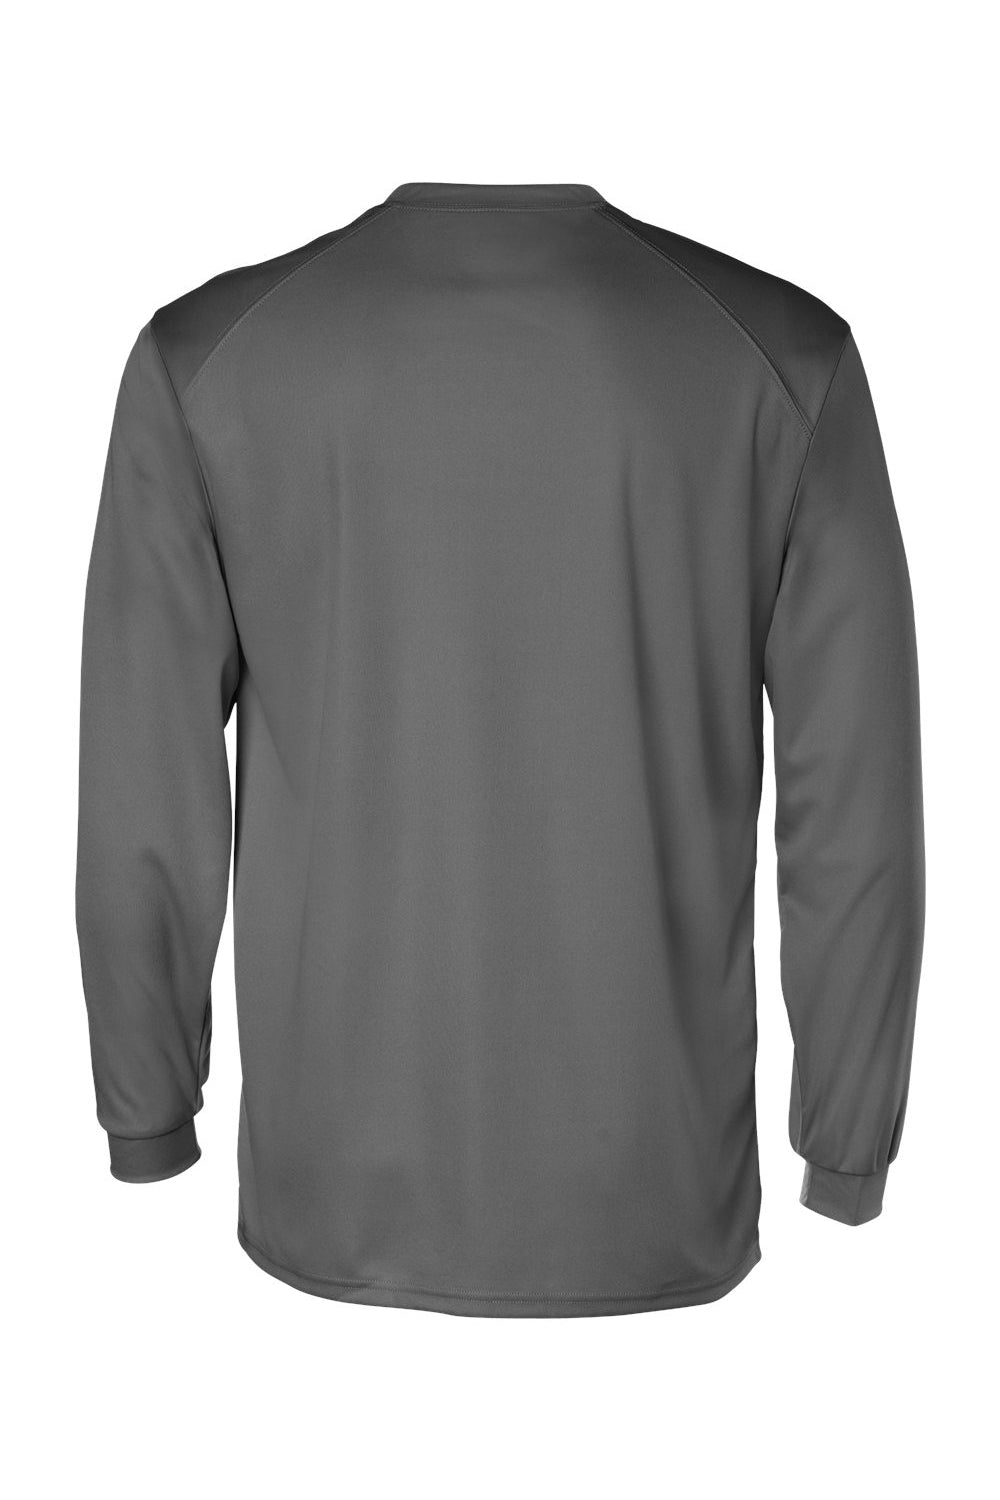 Badger 4104 Mens B-Core Moisture Wicking Long Sleeve Crewneck T-Shirt Graphite Grey Flat Back